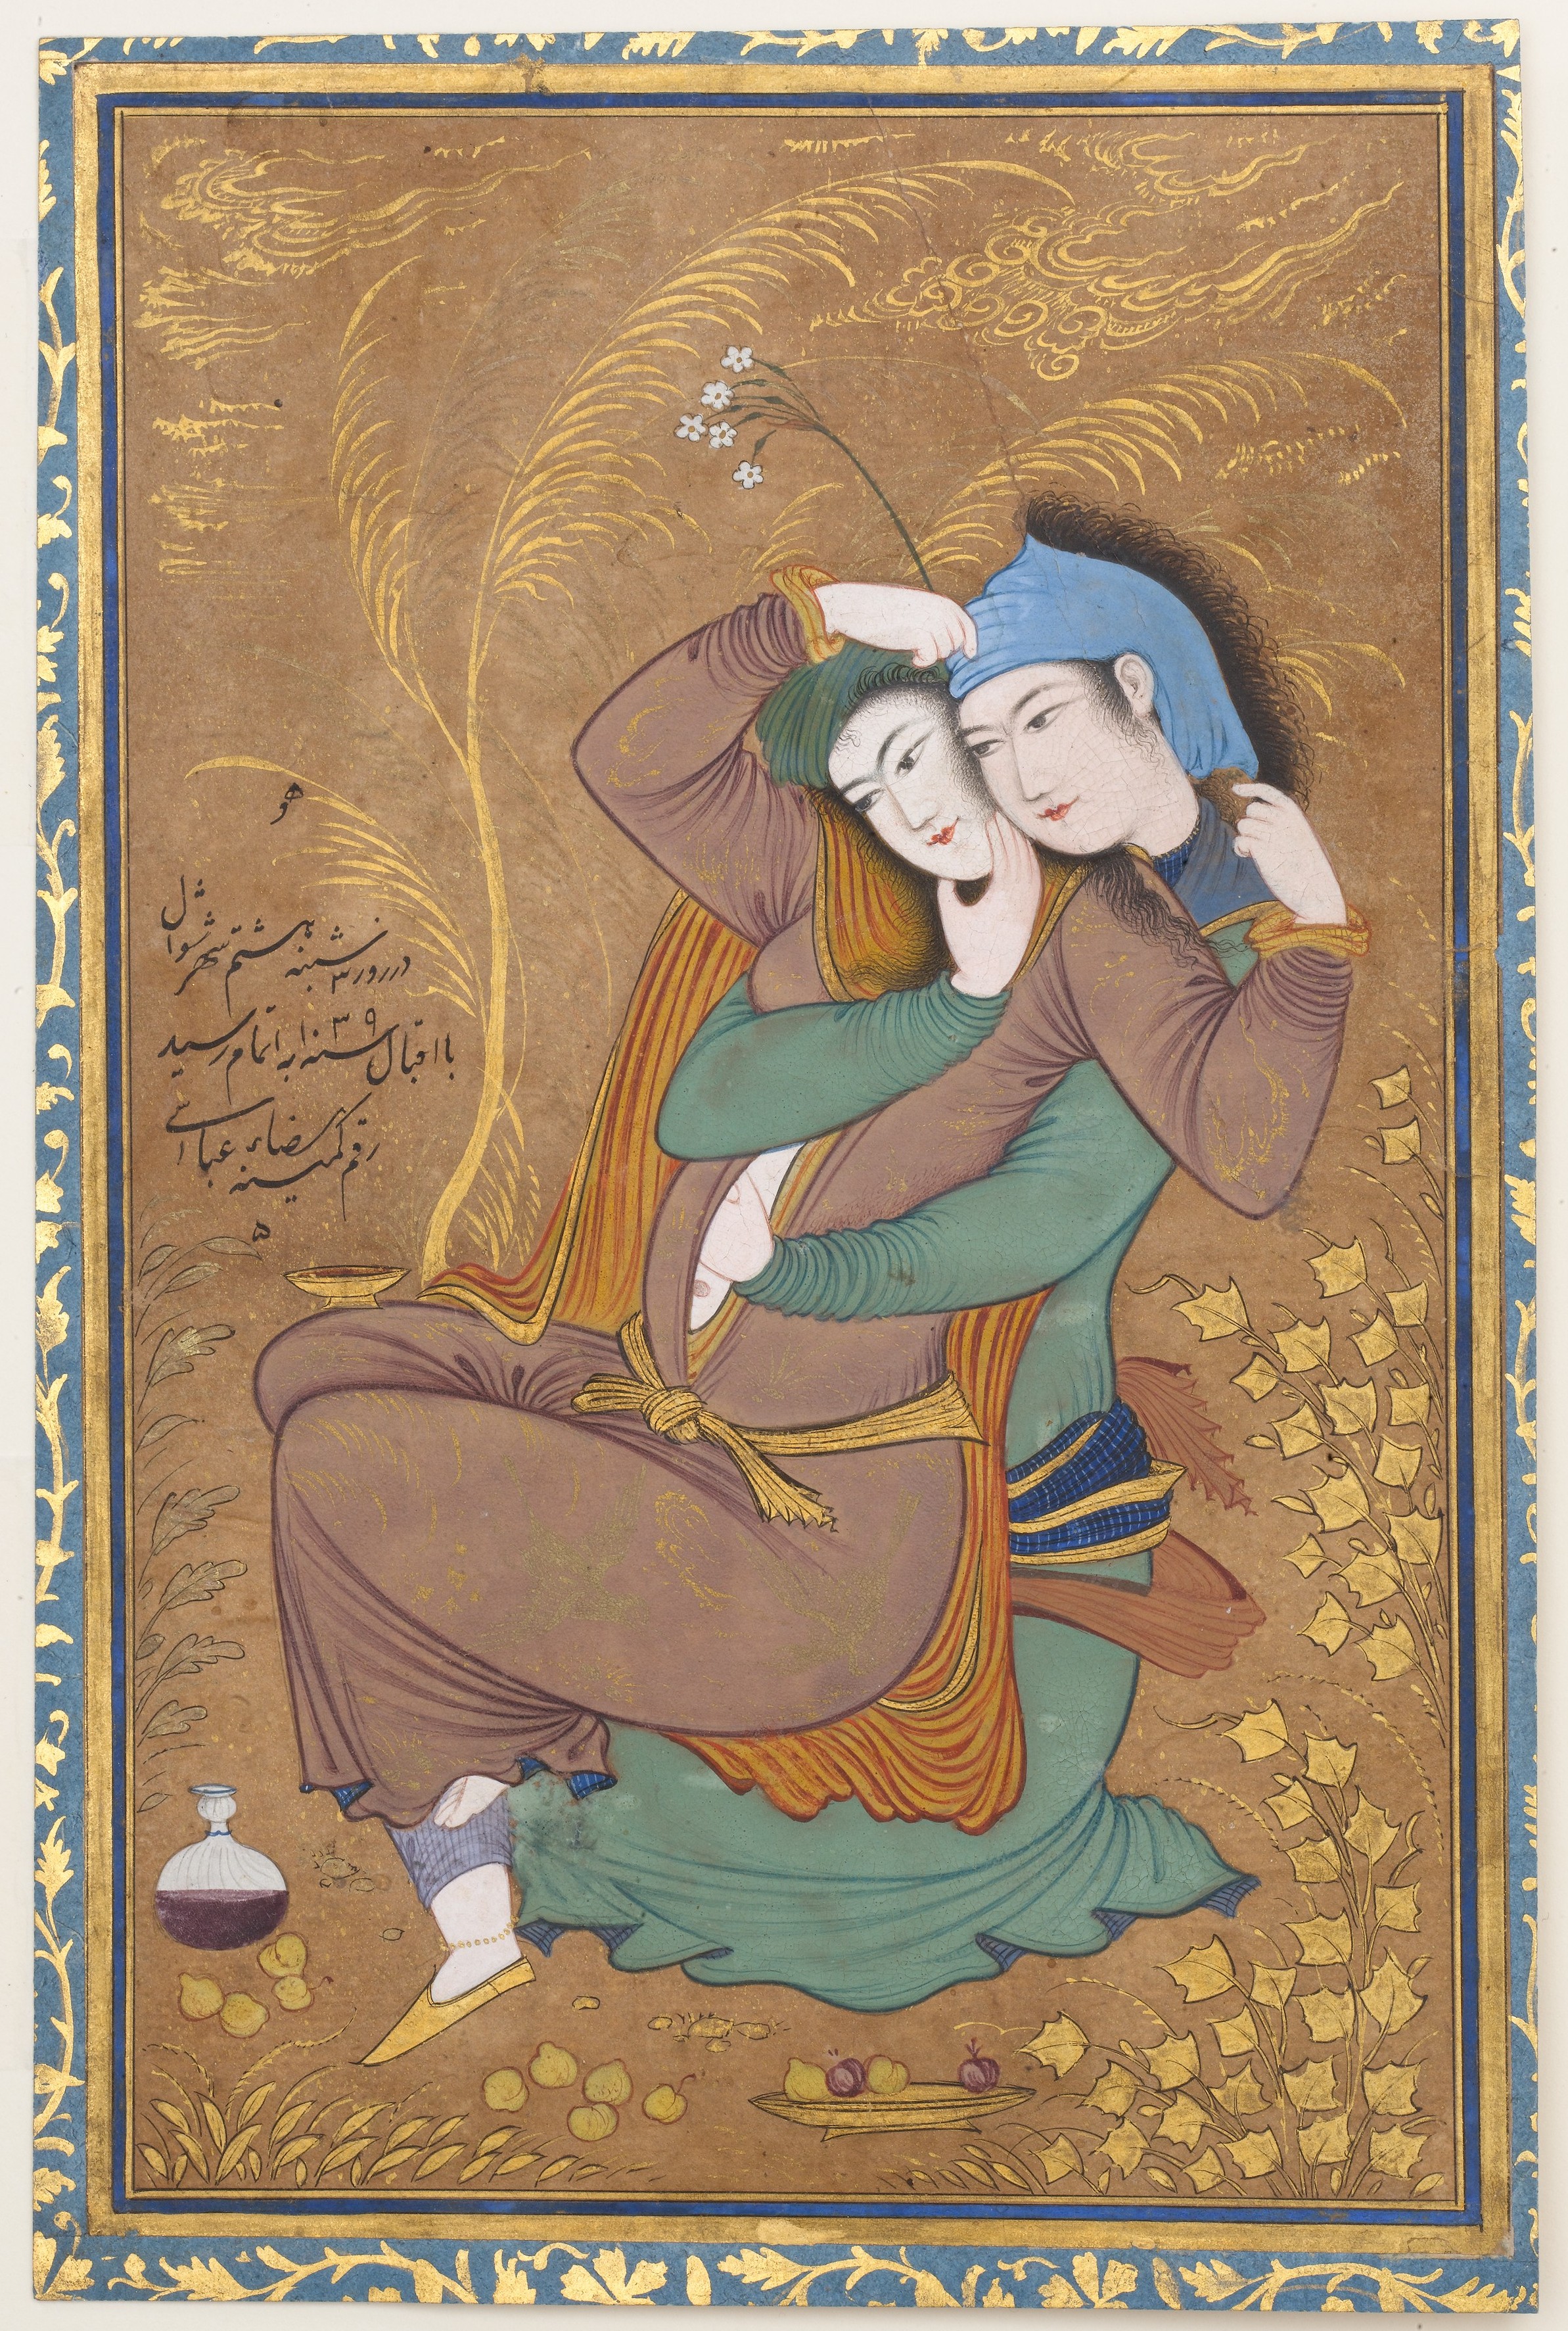 العاشقان by Riza‑yi 'Abbasi - 1630 م - 17.5 في 11.1 سم 